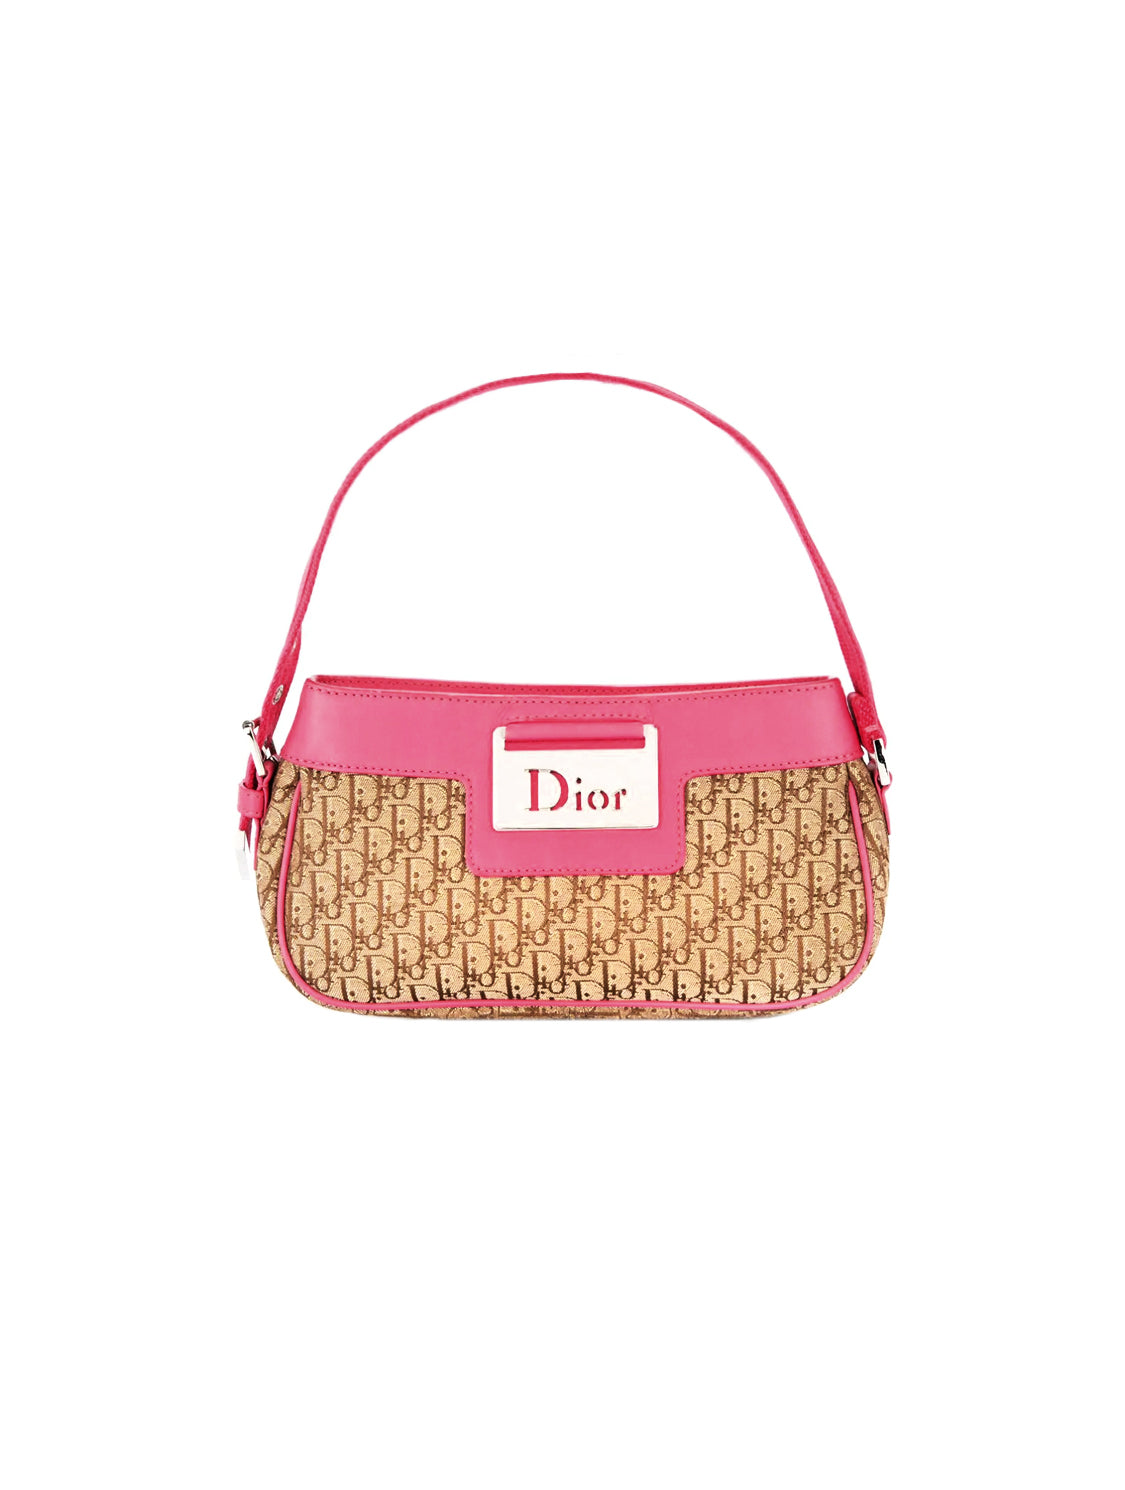 Túi Medium Lady Dior Bag màu hồng cát cannage da cừu GHW best quality